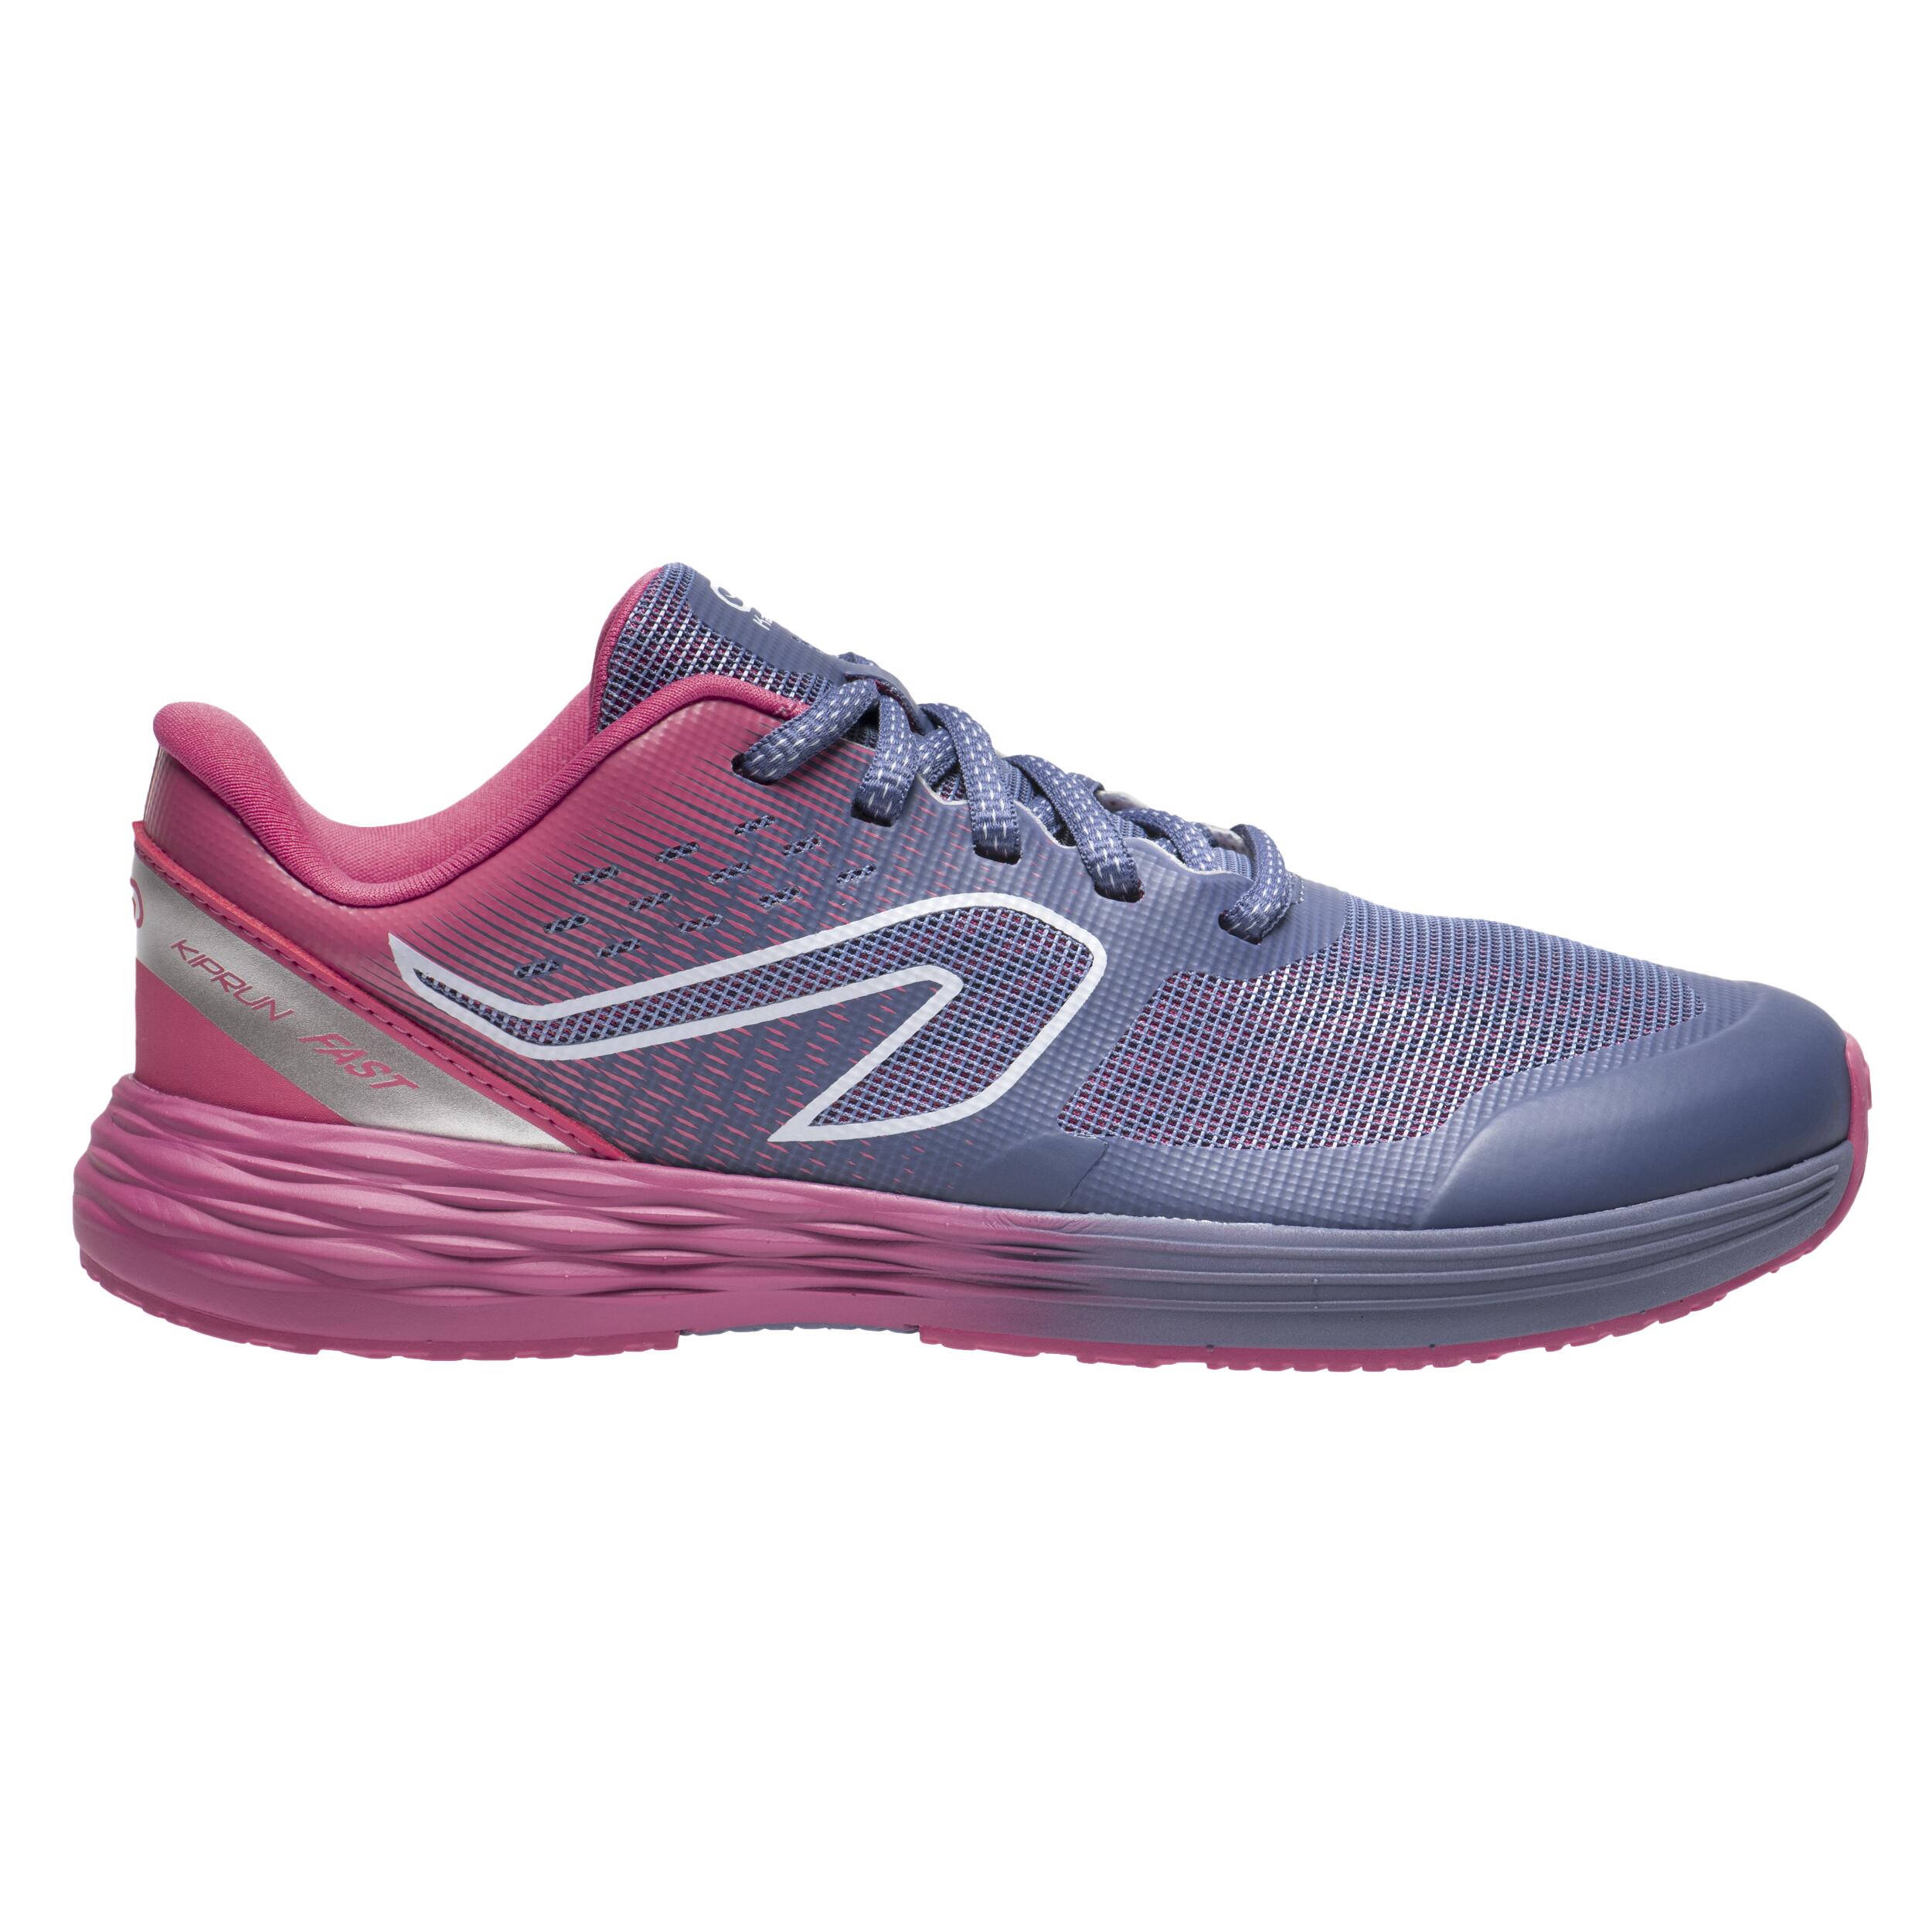 Kids' running shoes -  Kiprun fast pink blue 8/8